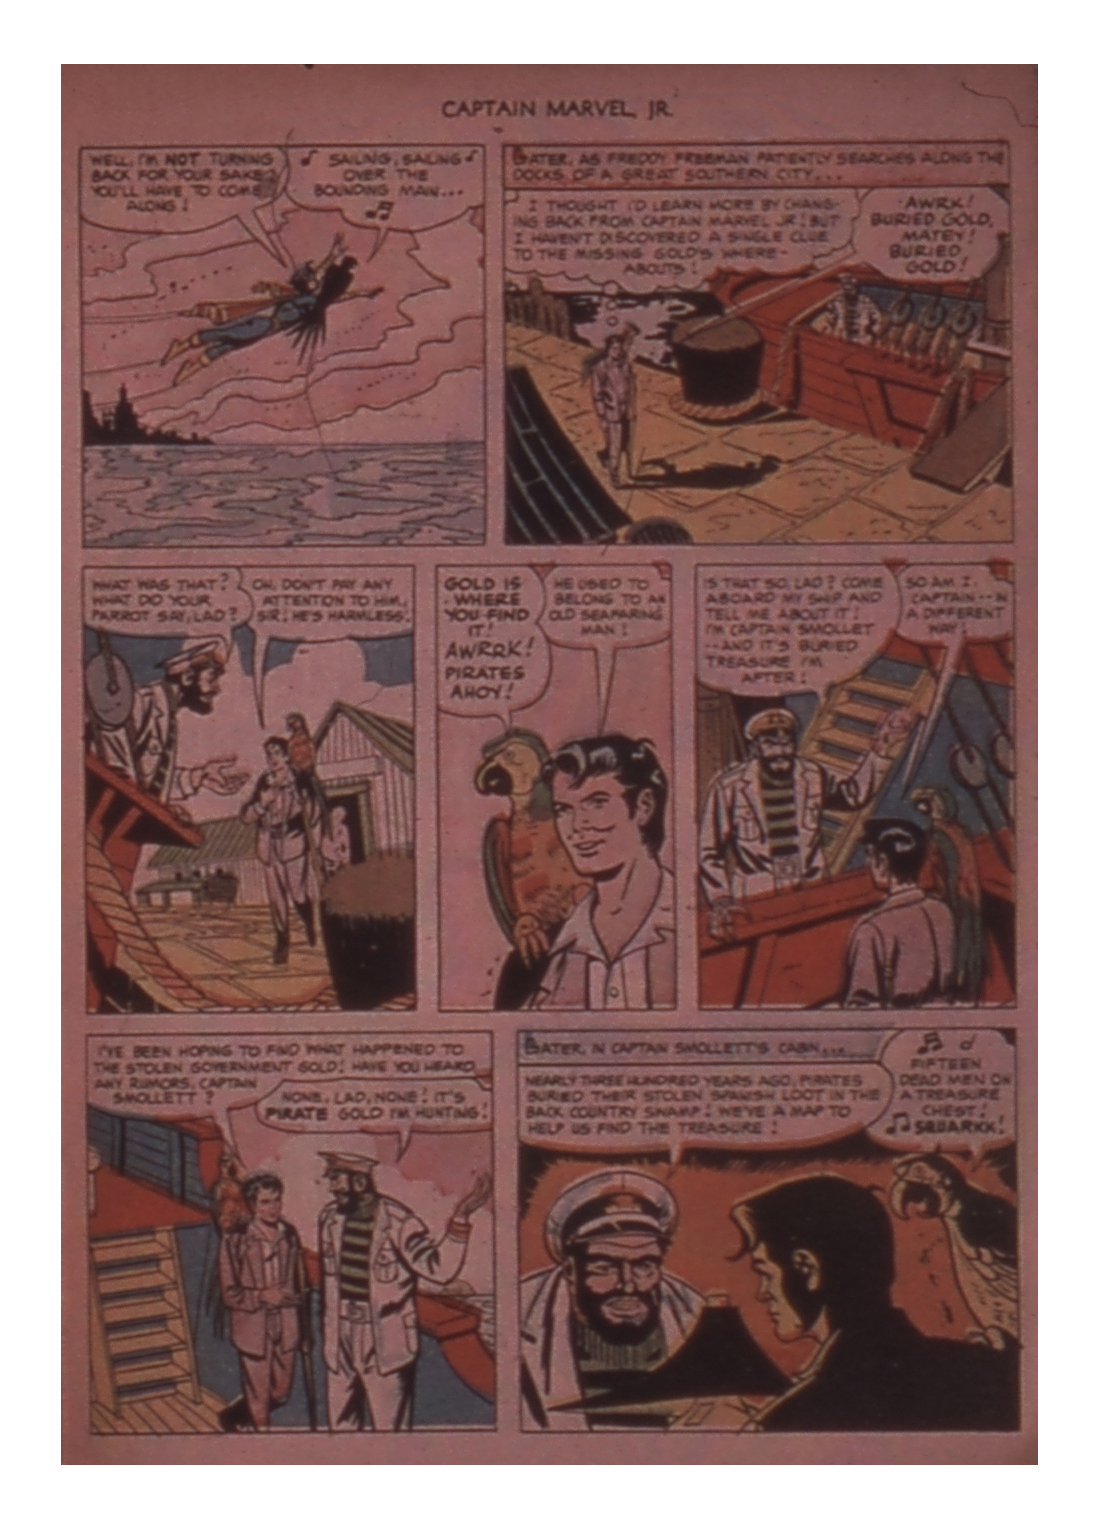 Read online Captain Marvel, Jr. comic -  Issue #113 - 7